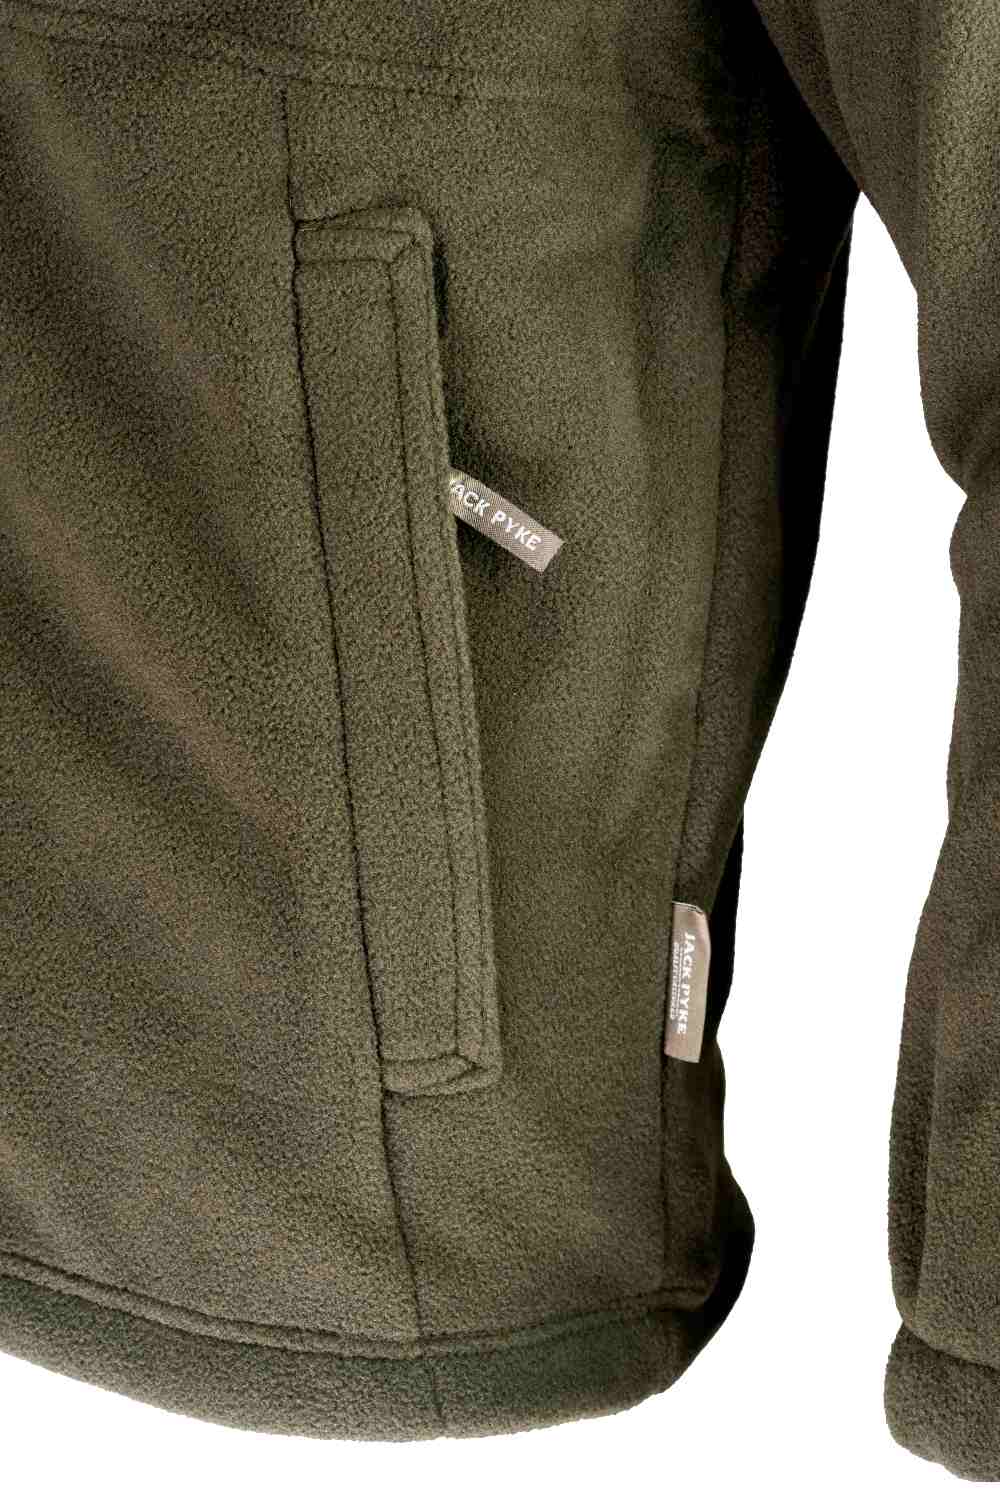 Pocket Detail  Zipper pull Jack Pyke Countryman Fleece Jacket- Dark Olive 